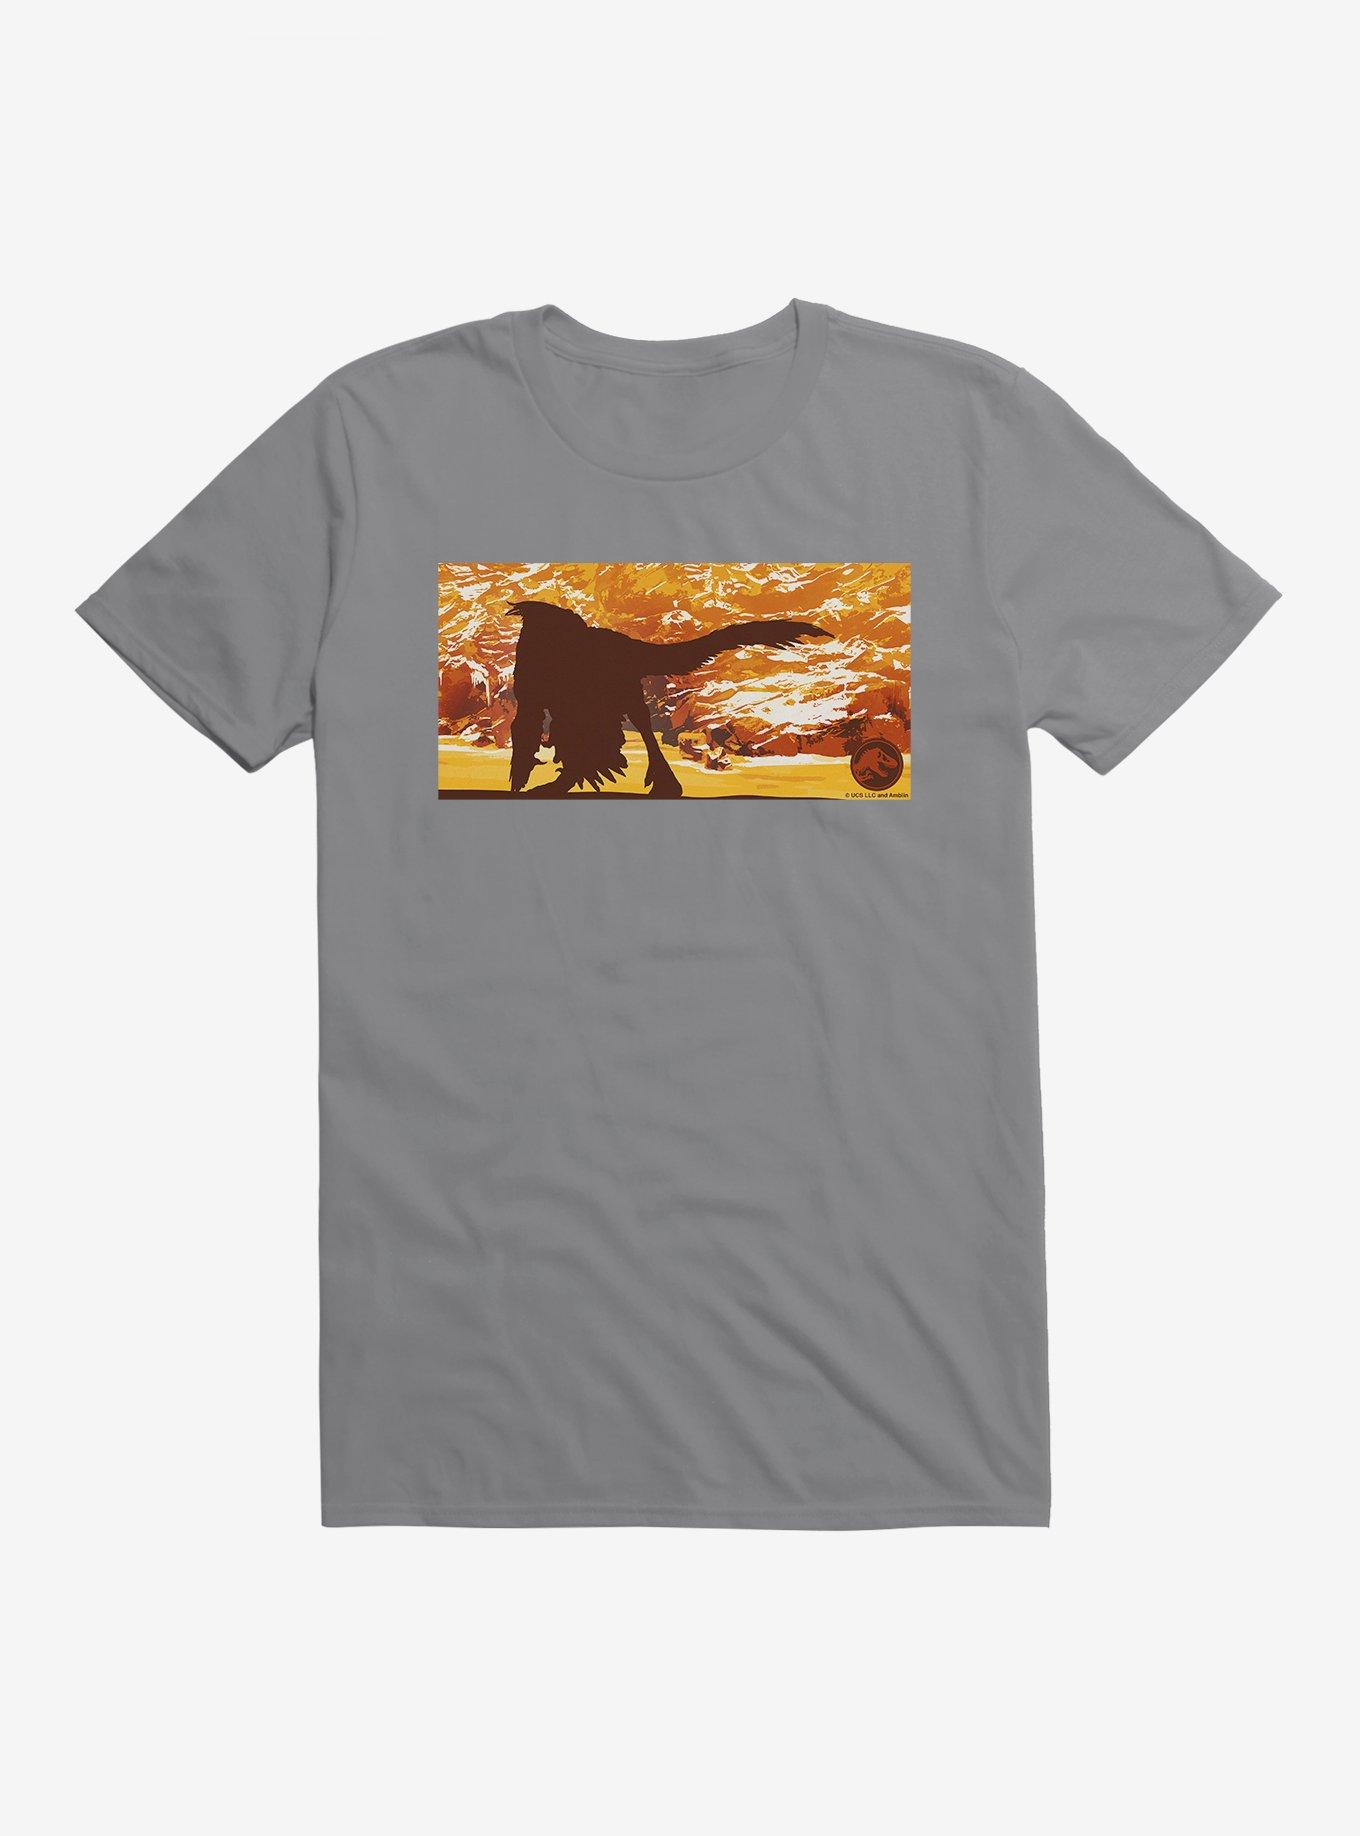 Jurassic World Dominion Pryoraptor T-Shirt